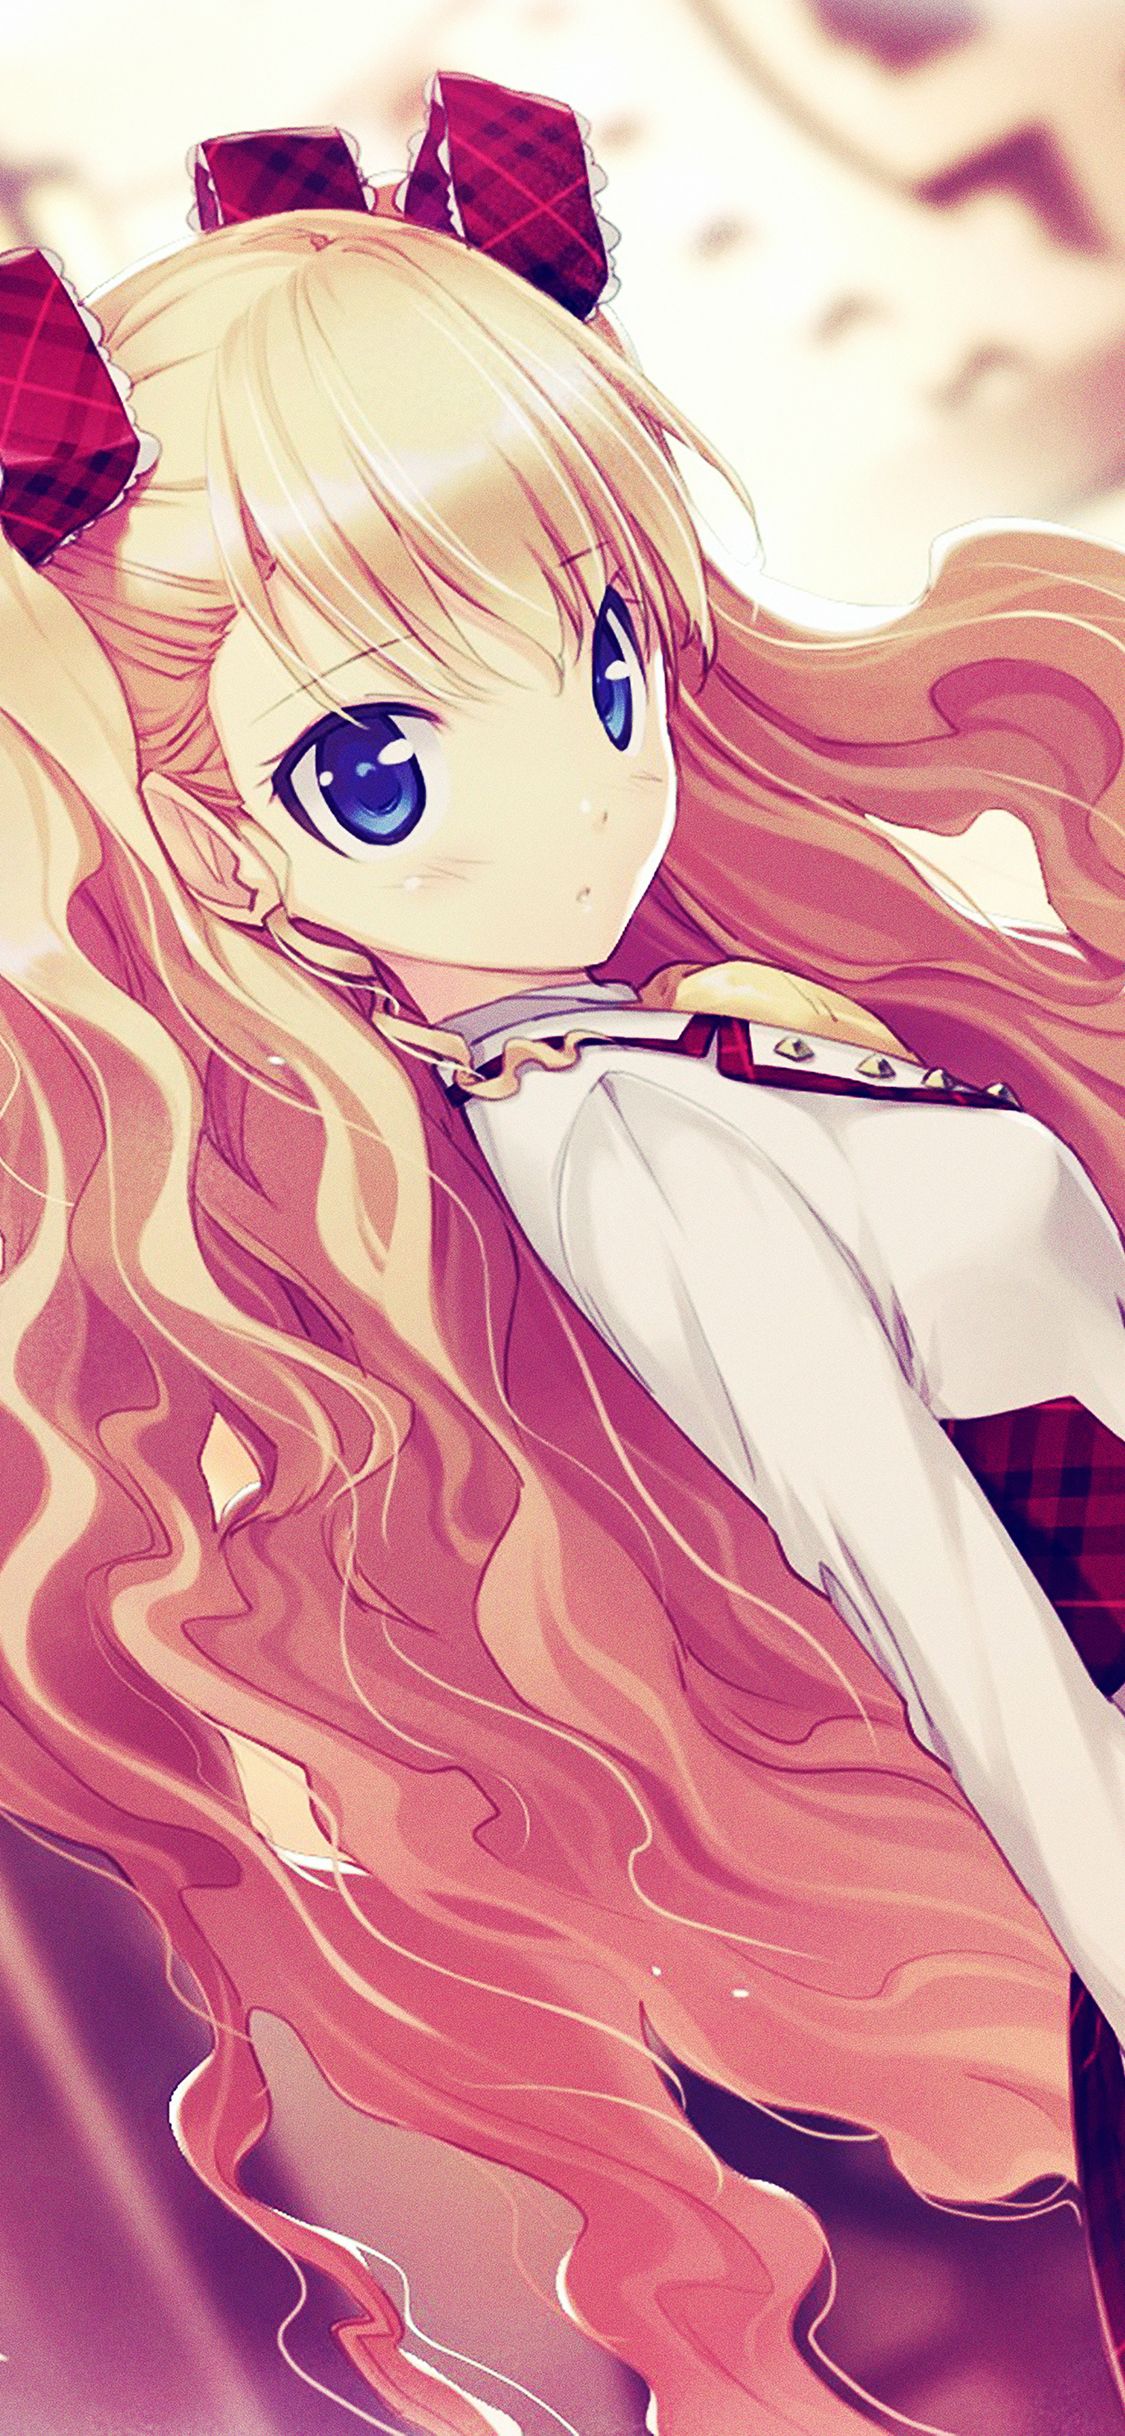 iPhone X wallpaper. anime girl blonde